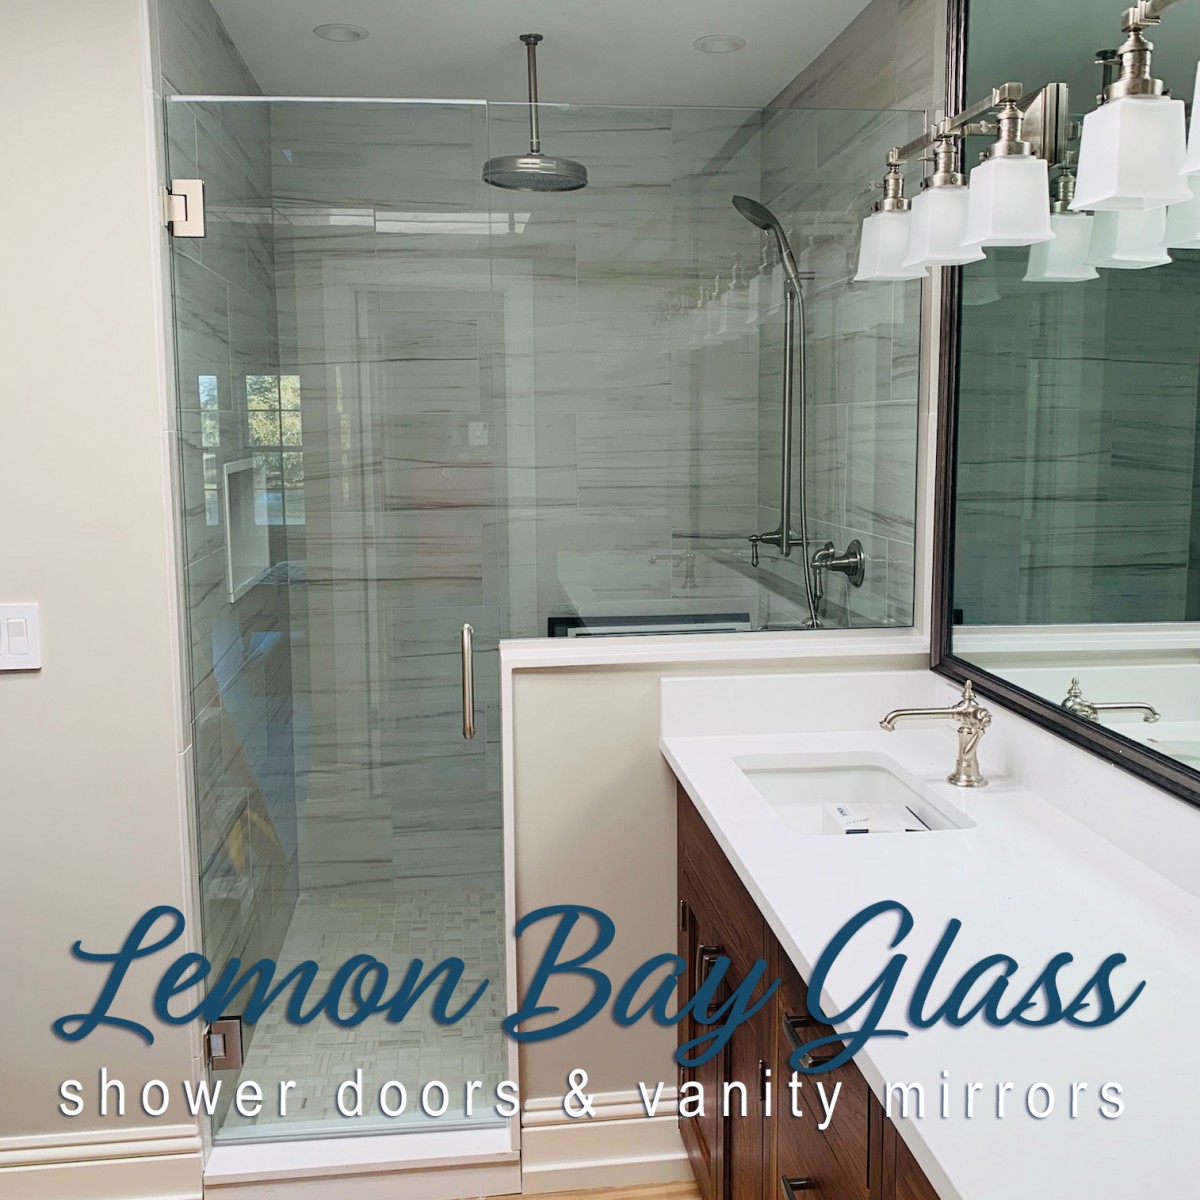 Lemon-Bay-Glass_Bathroom-Shower-Doors-and-Vanity-Mirrors_YELP-Connect_111121-